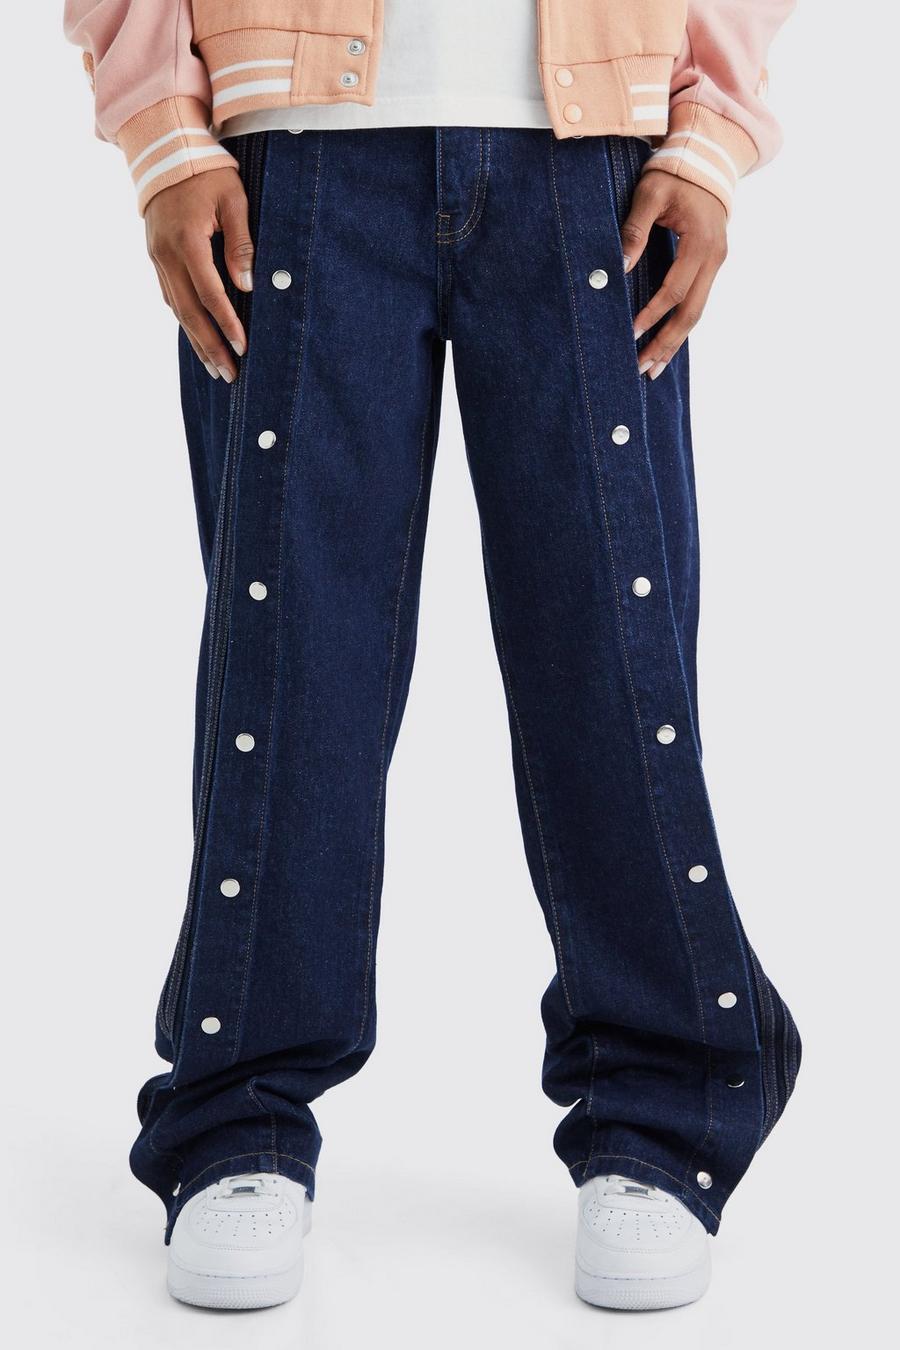 spodnie baggy jeans guziki napy zdobienie